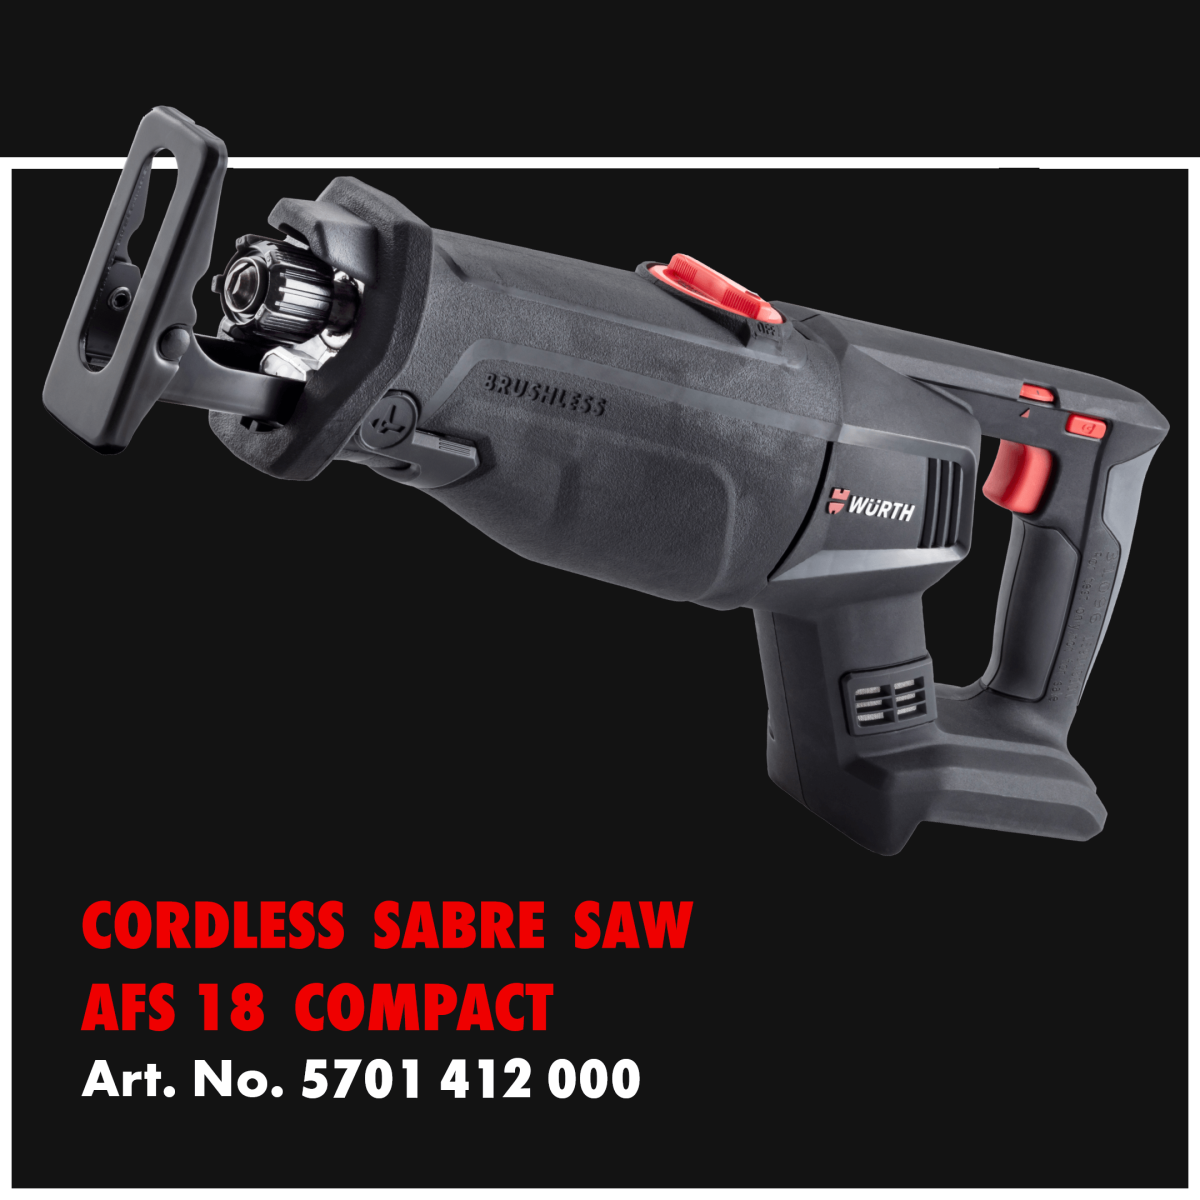 Cordless Sabre Saw AFS 18 Compact